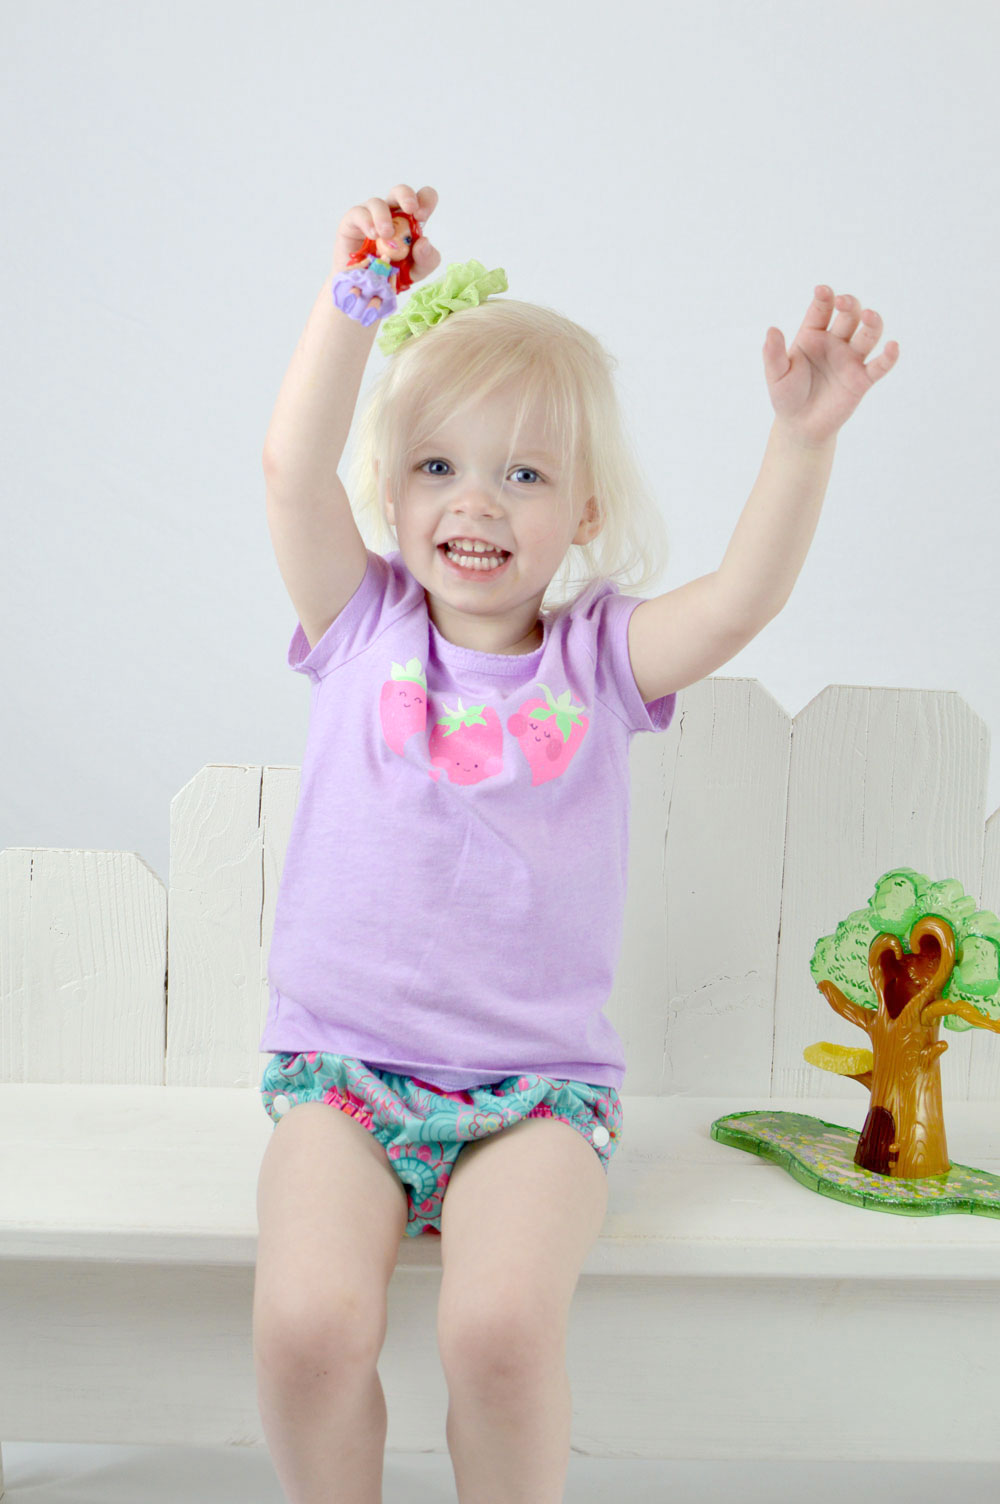 Cute Charlie Banana toddler training pants and modern patterns